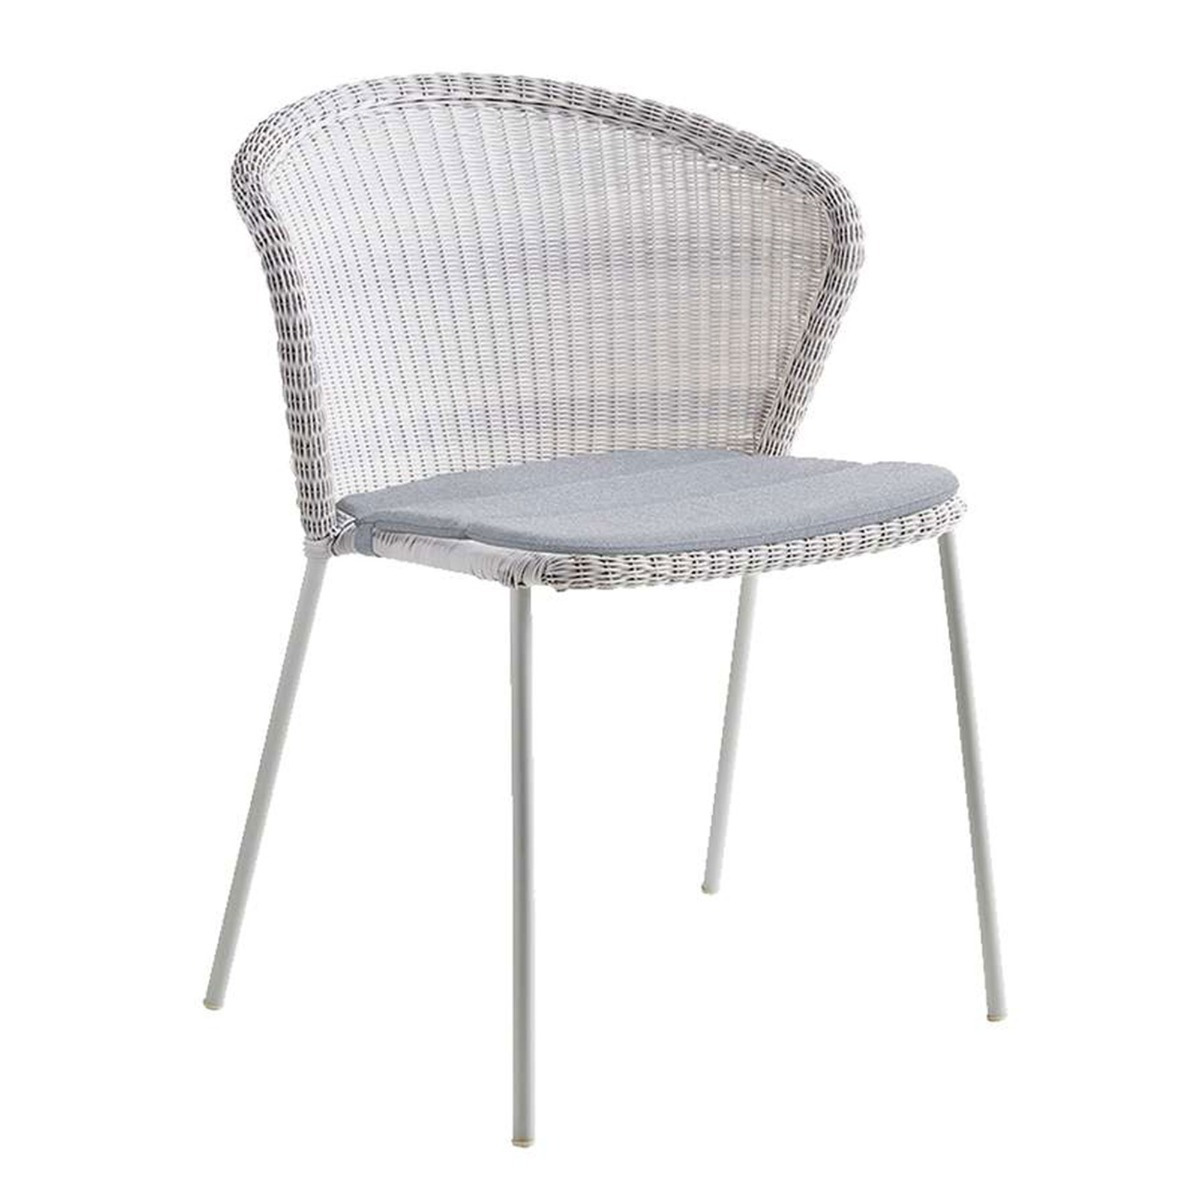 Lean Chair With Cushion, Grey - Barker & Stonehouse